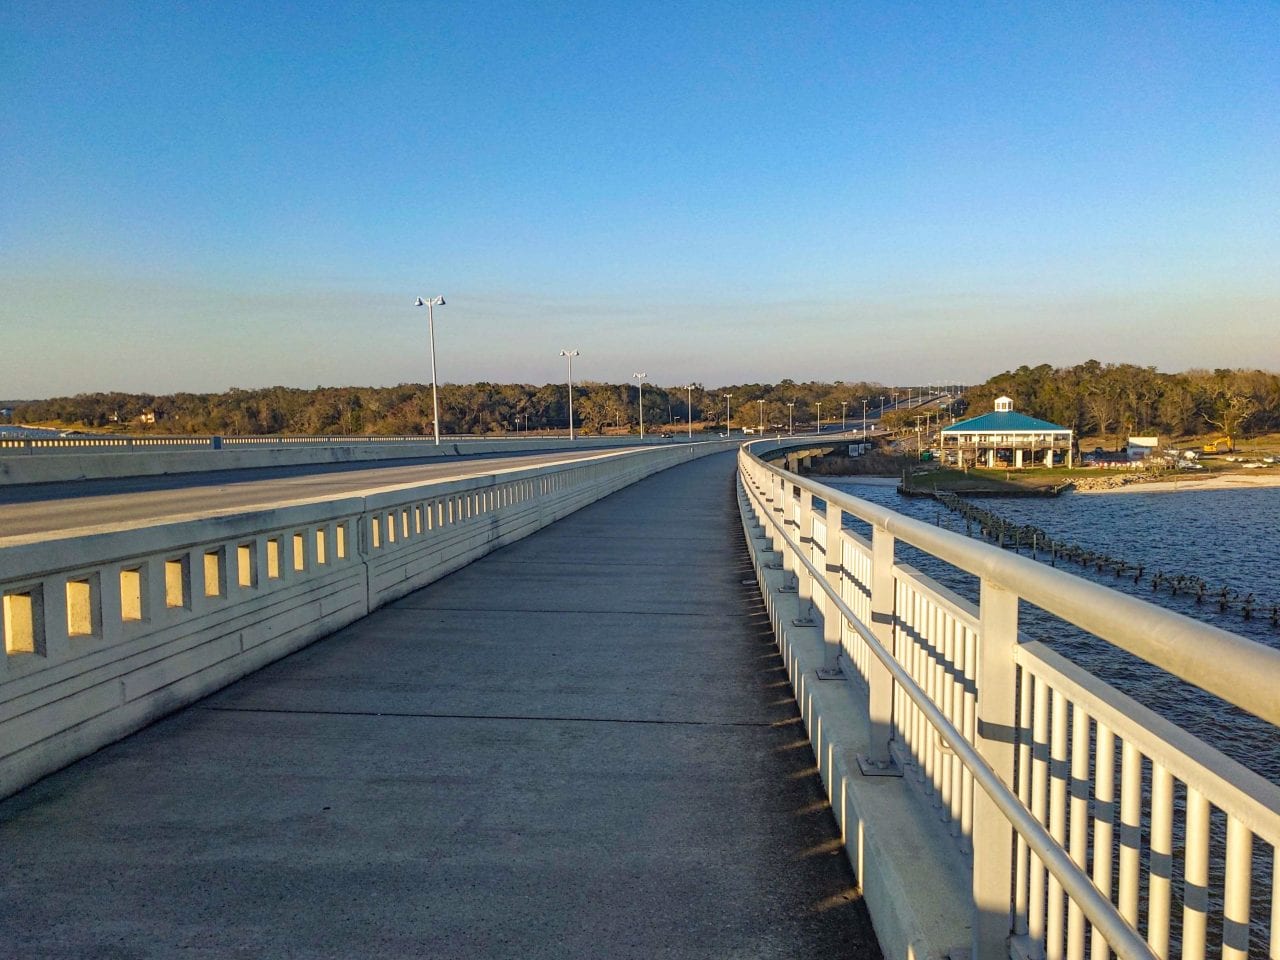 View from the bike lanes of the Biloxi Bay Bridge